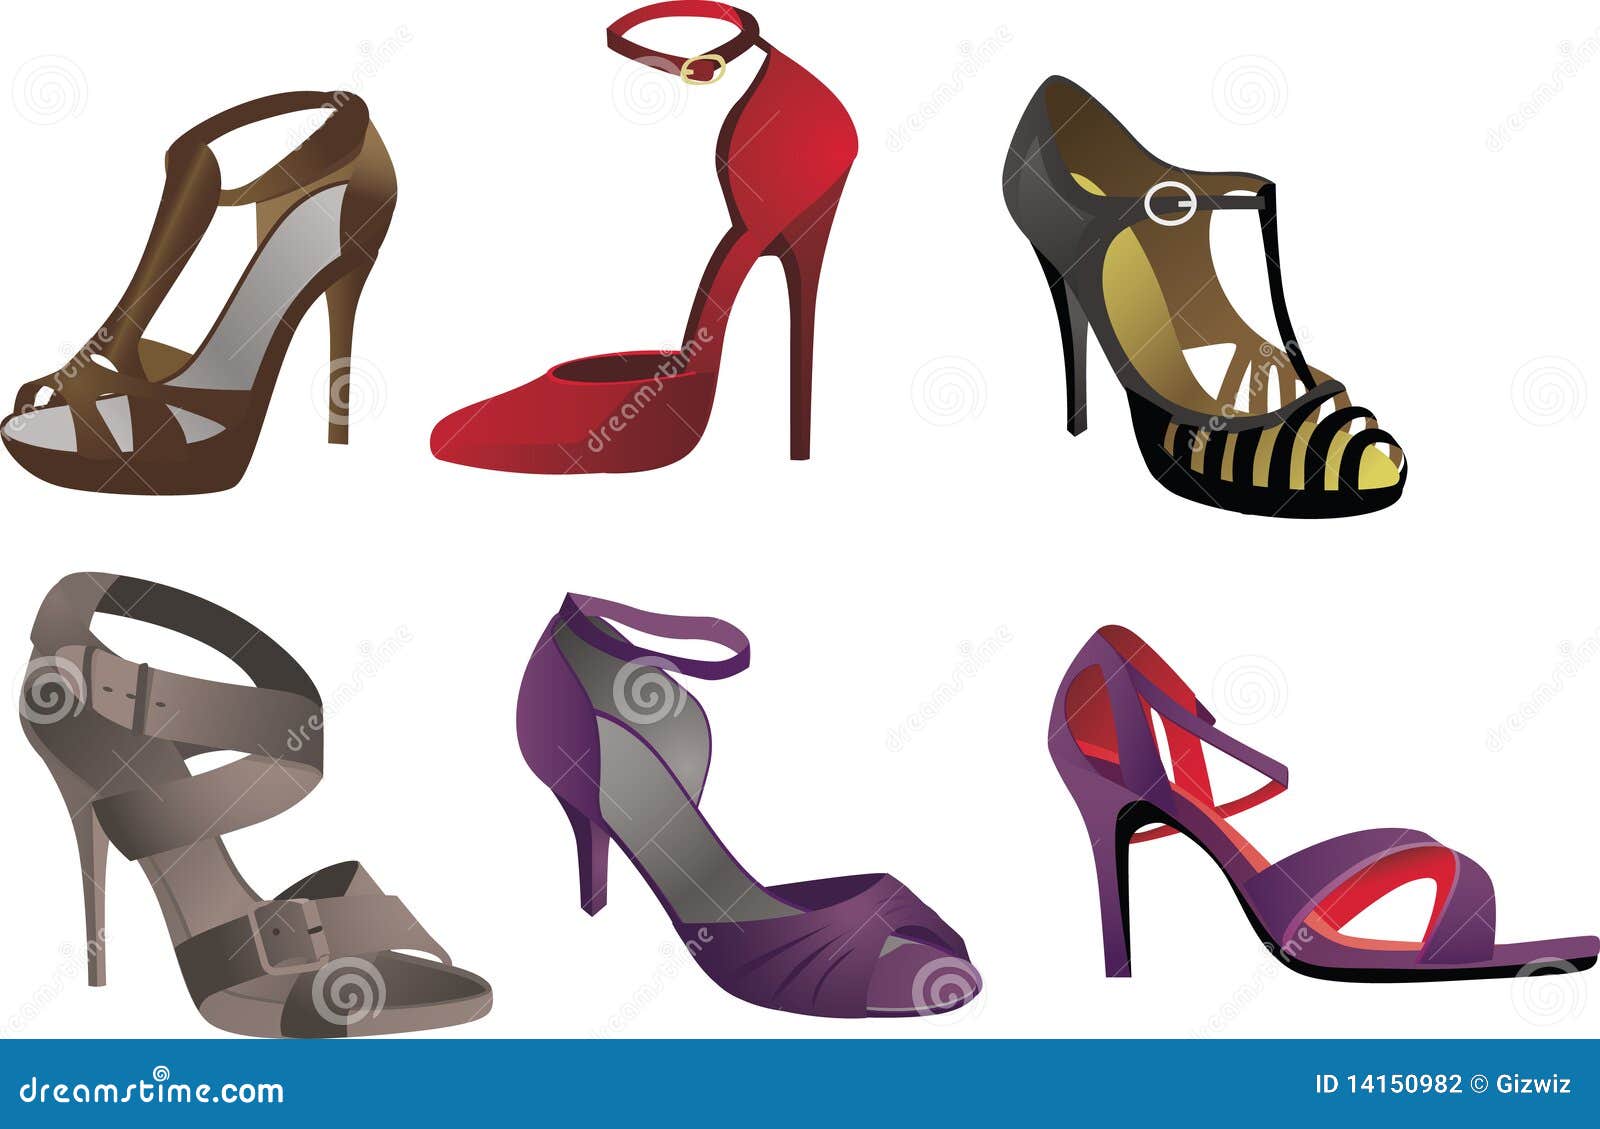 5 Types of Heels Women should Consider while Thinking of Fashion -  MyWeddingMyDay